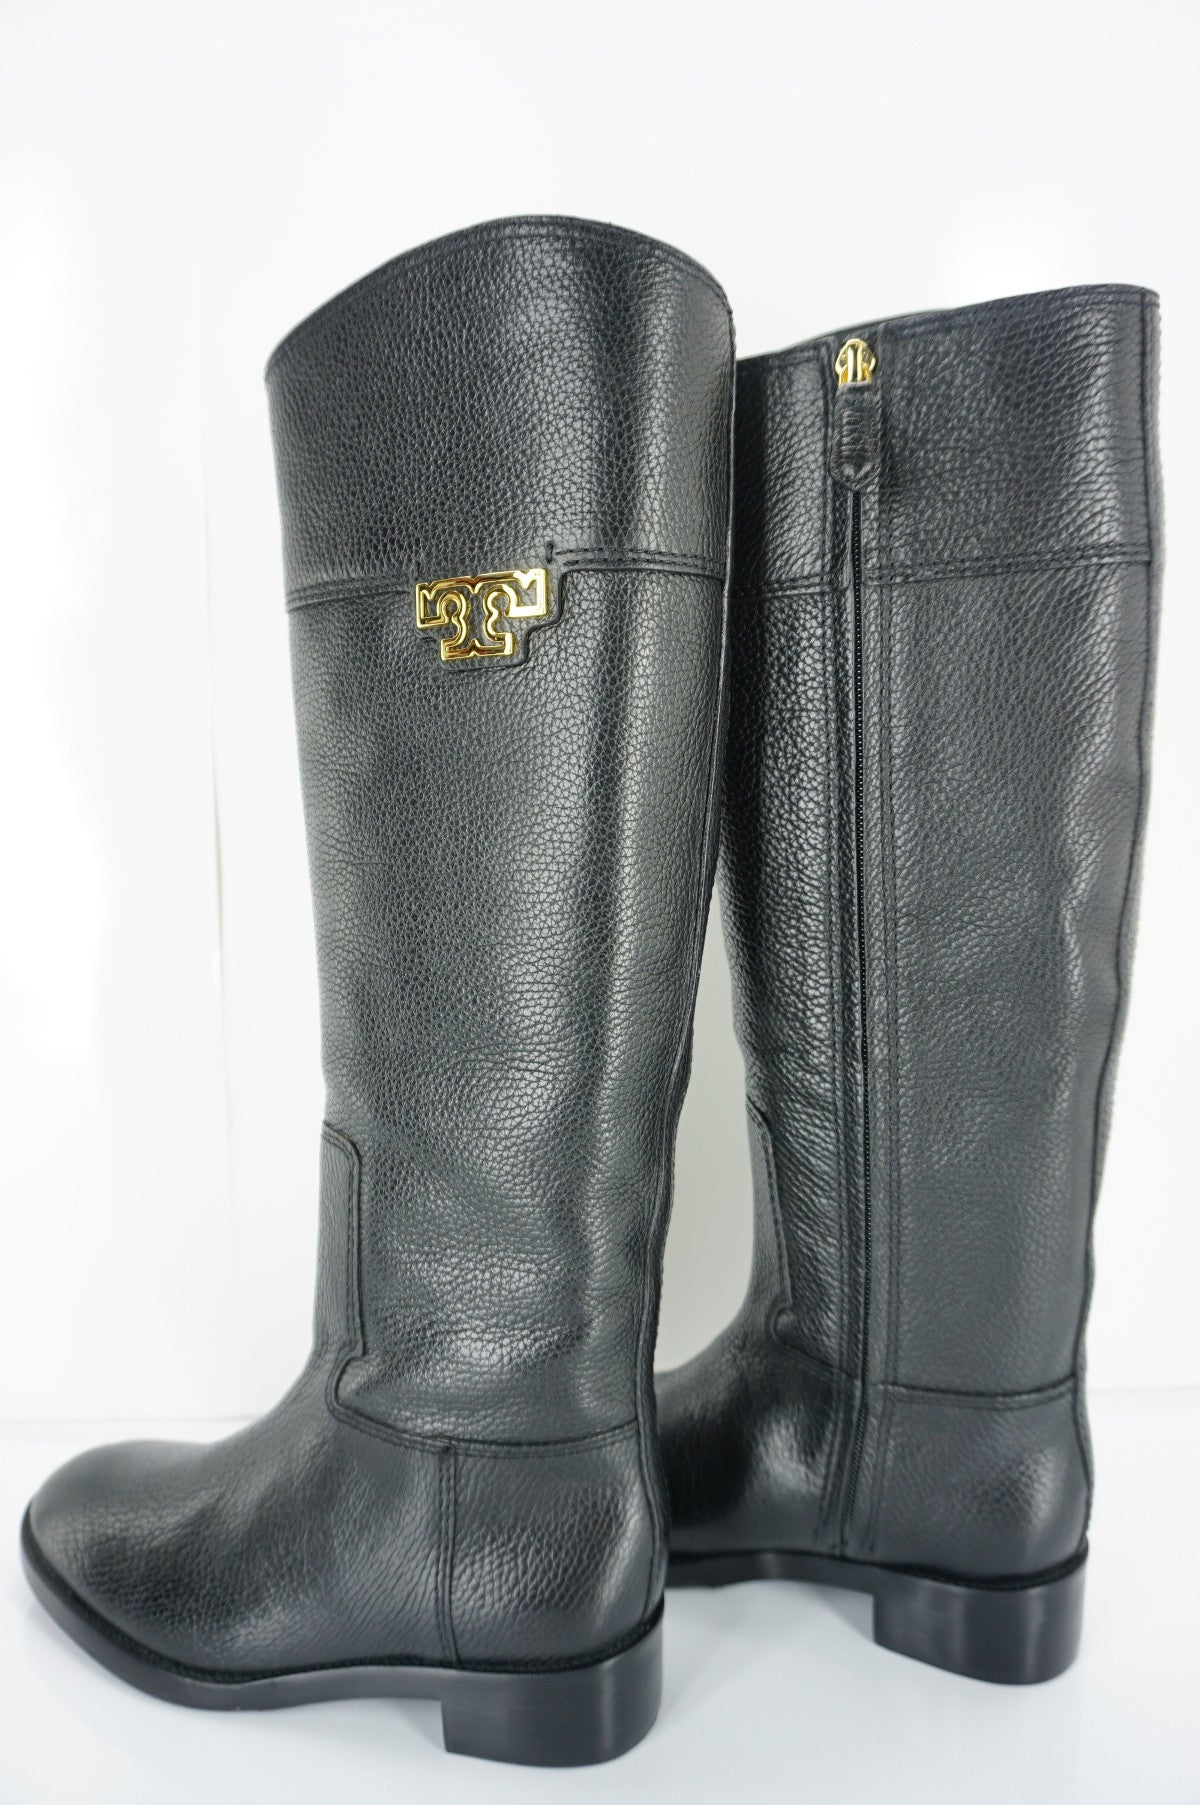 Tory Burch Joanna Black Leather Gold Logo Riding Boots Size 5.5 Heels NIB $495